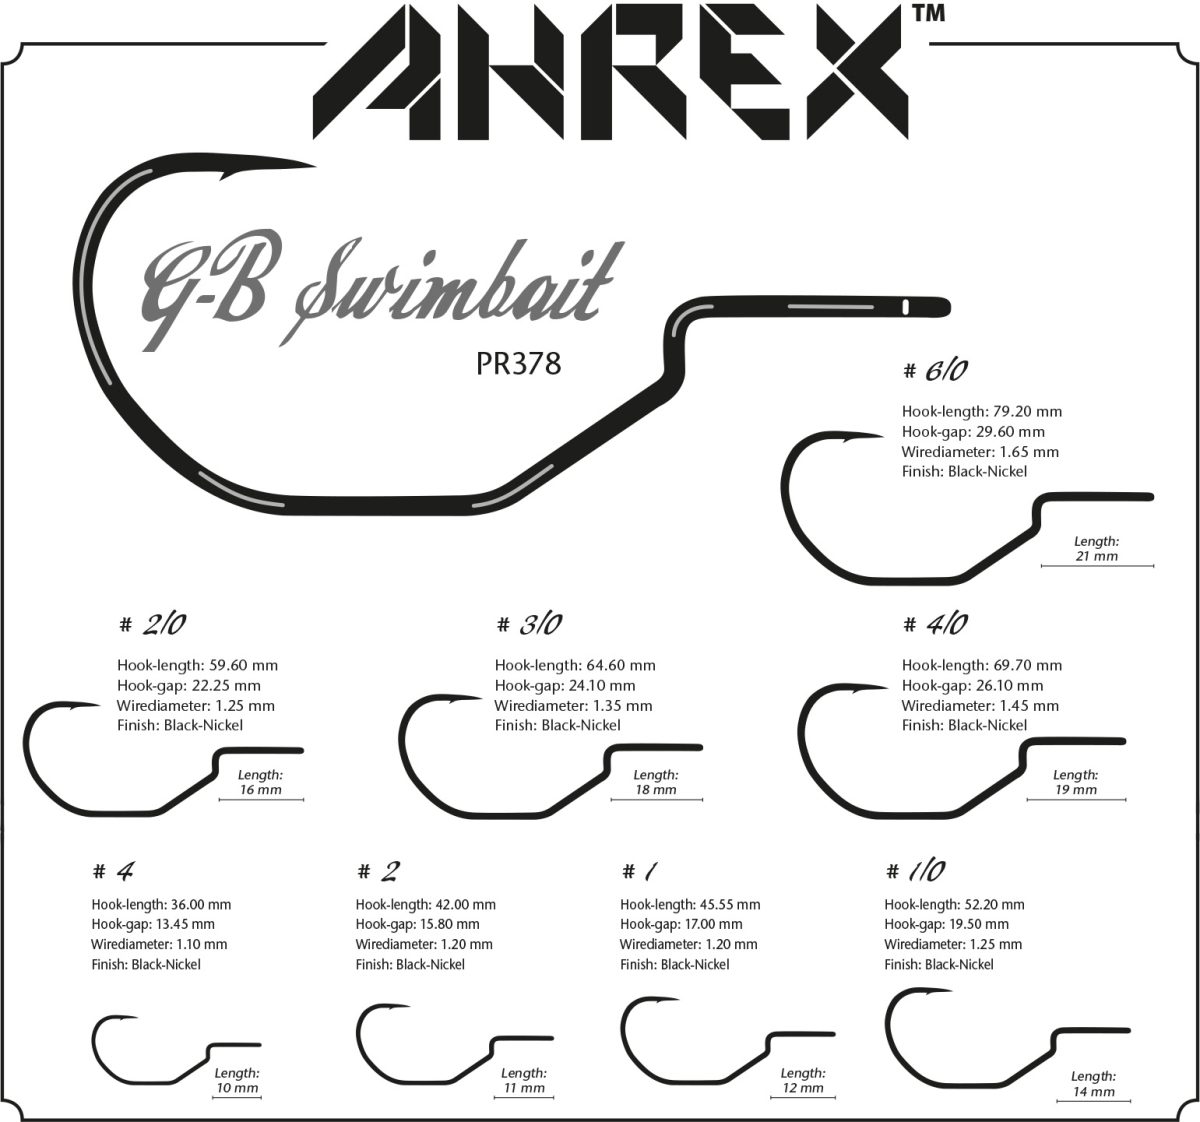 Ahrex PR378 GB Predator Swim Bait Hook